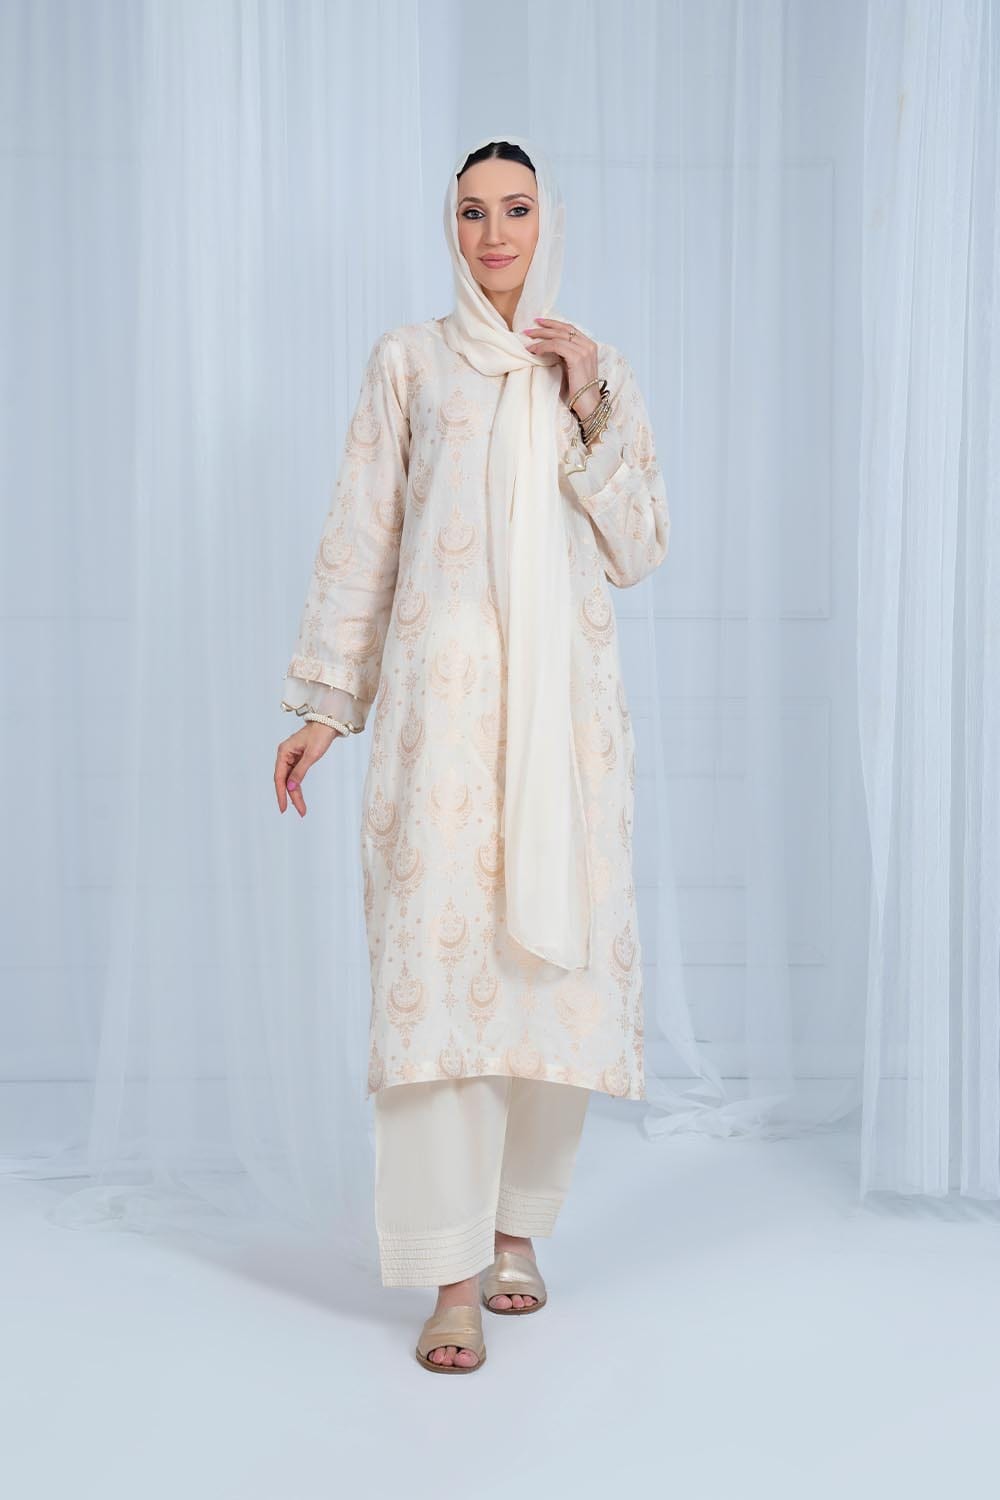 Hope Not Out by Shahid Afridi Eastern Women Shirts Jacquard Long Shirt Creamy White